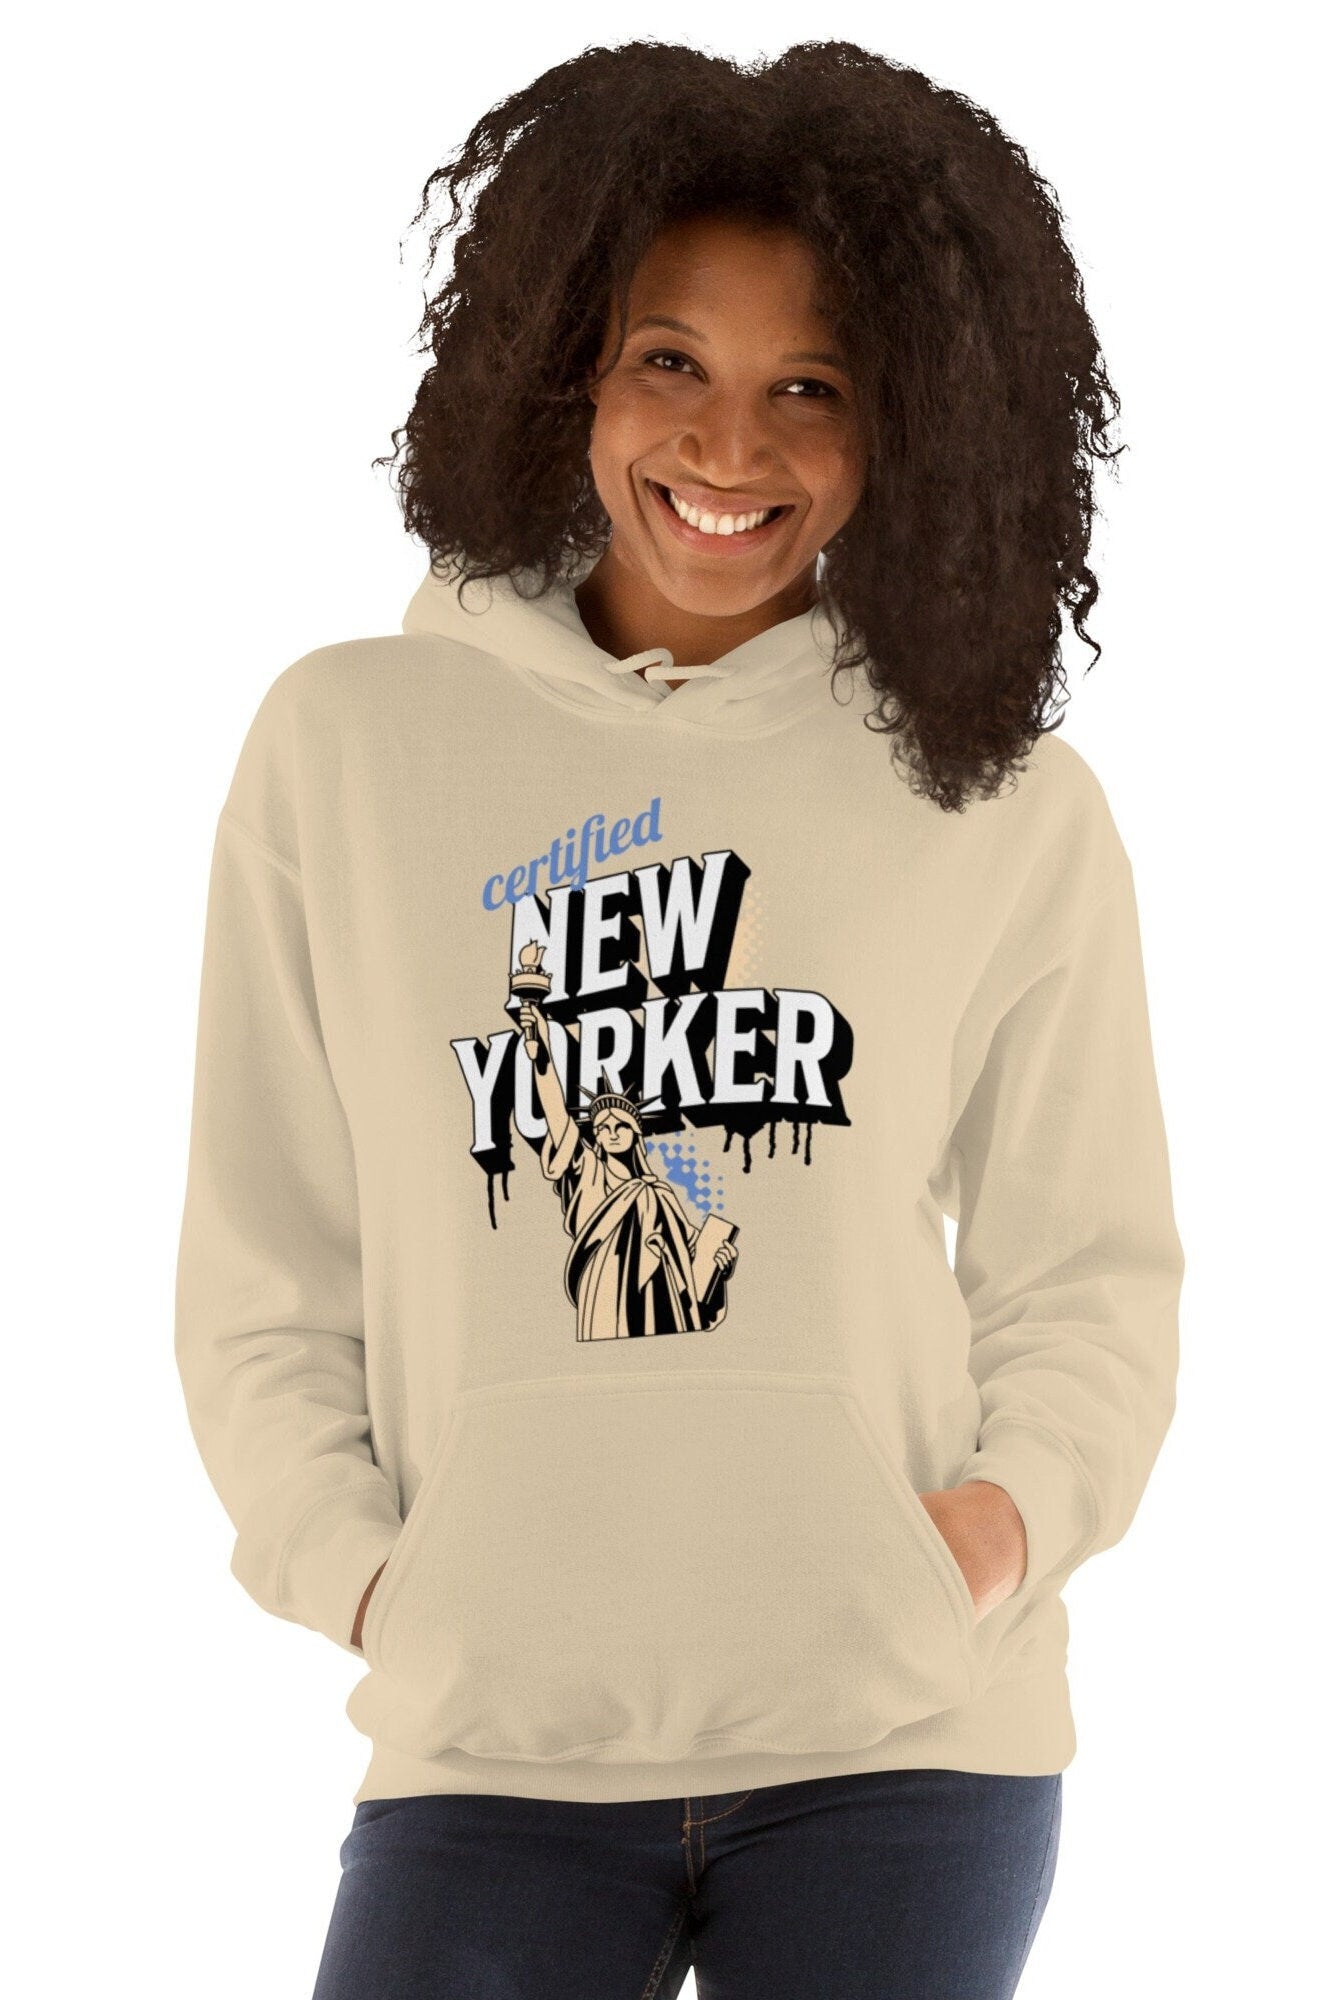 New York Sweatshirt, New York Sweater, New York Lover Gift, Vintage Sweatshirt, New York Crewneck, New York City Hoodie